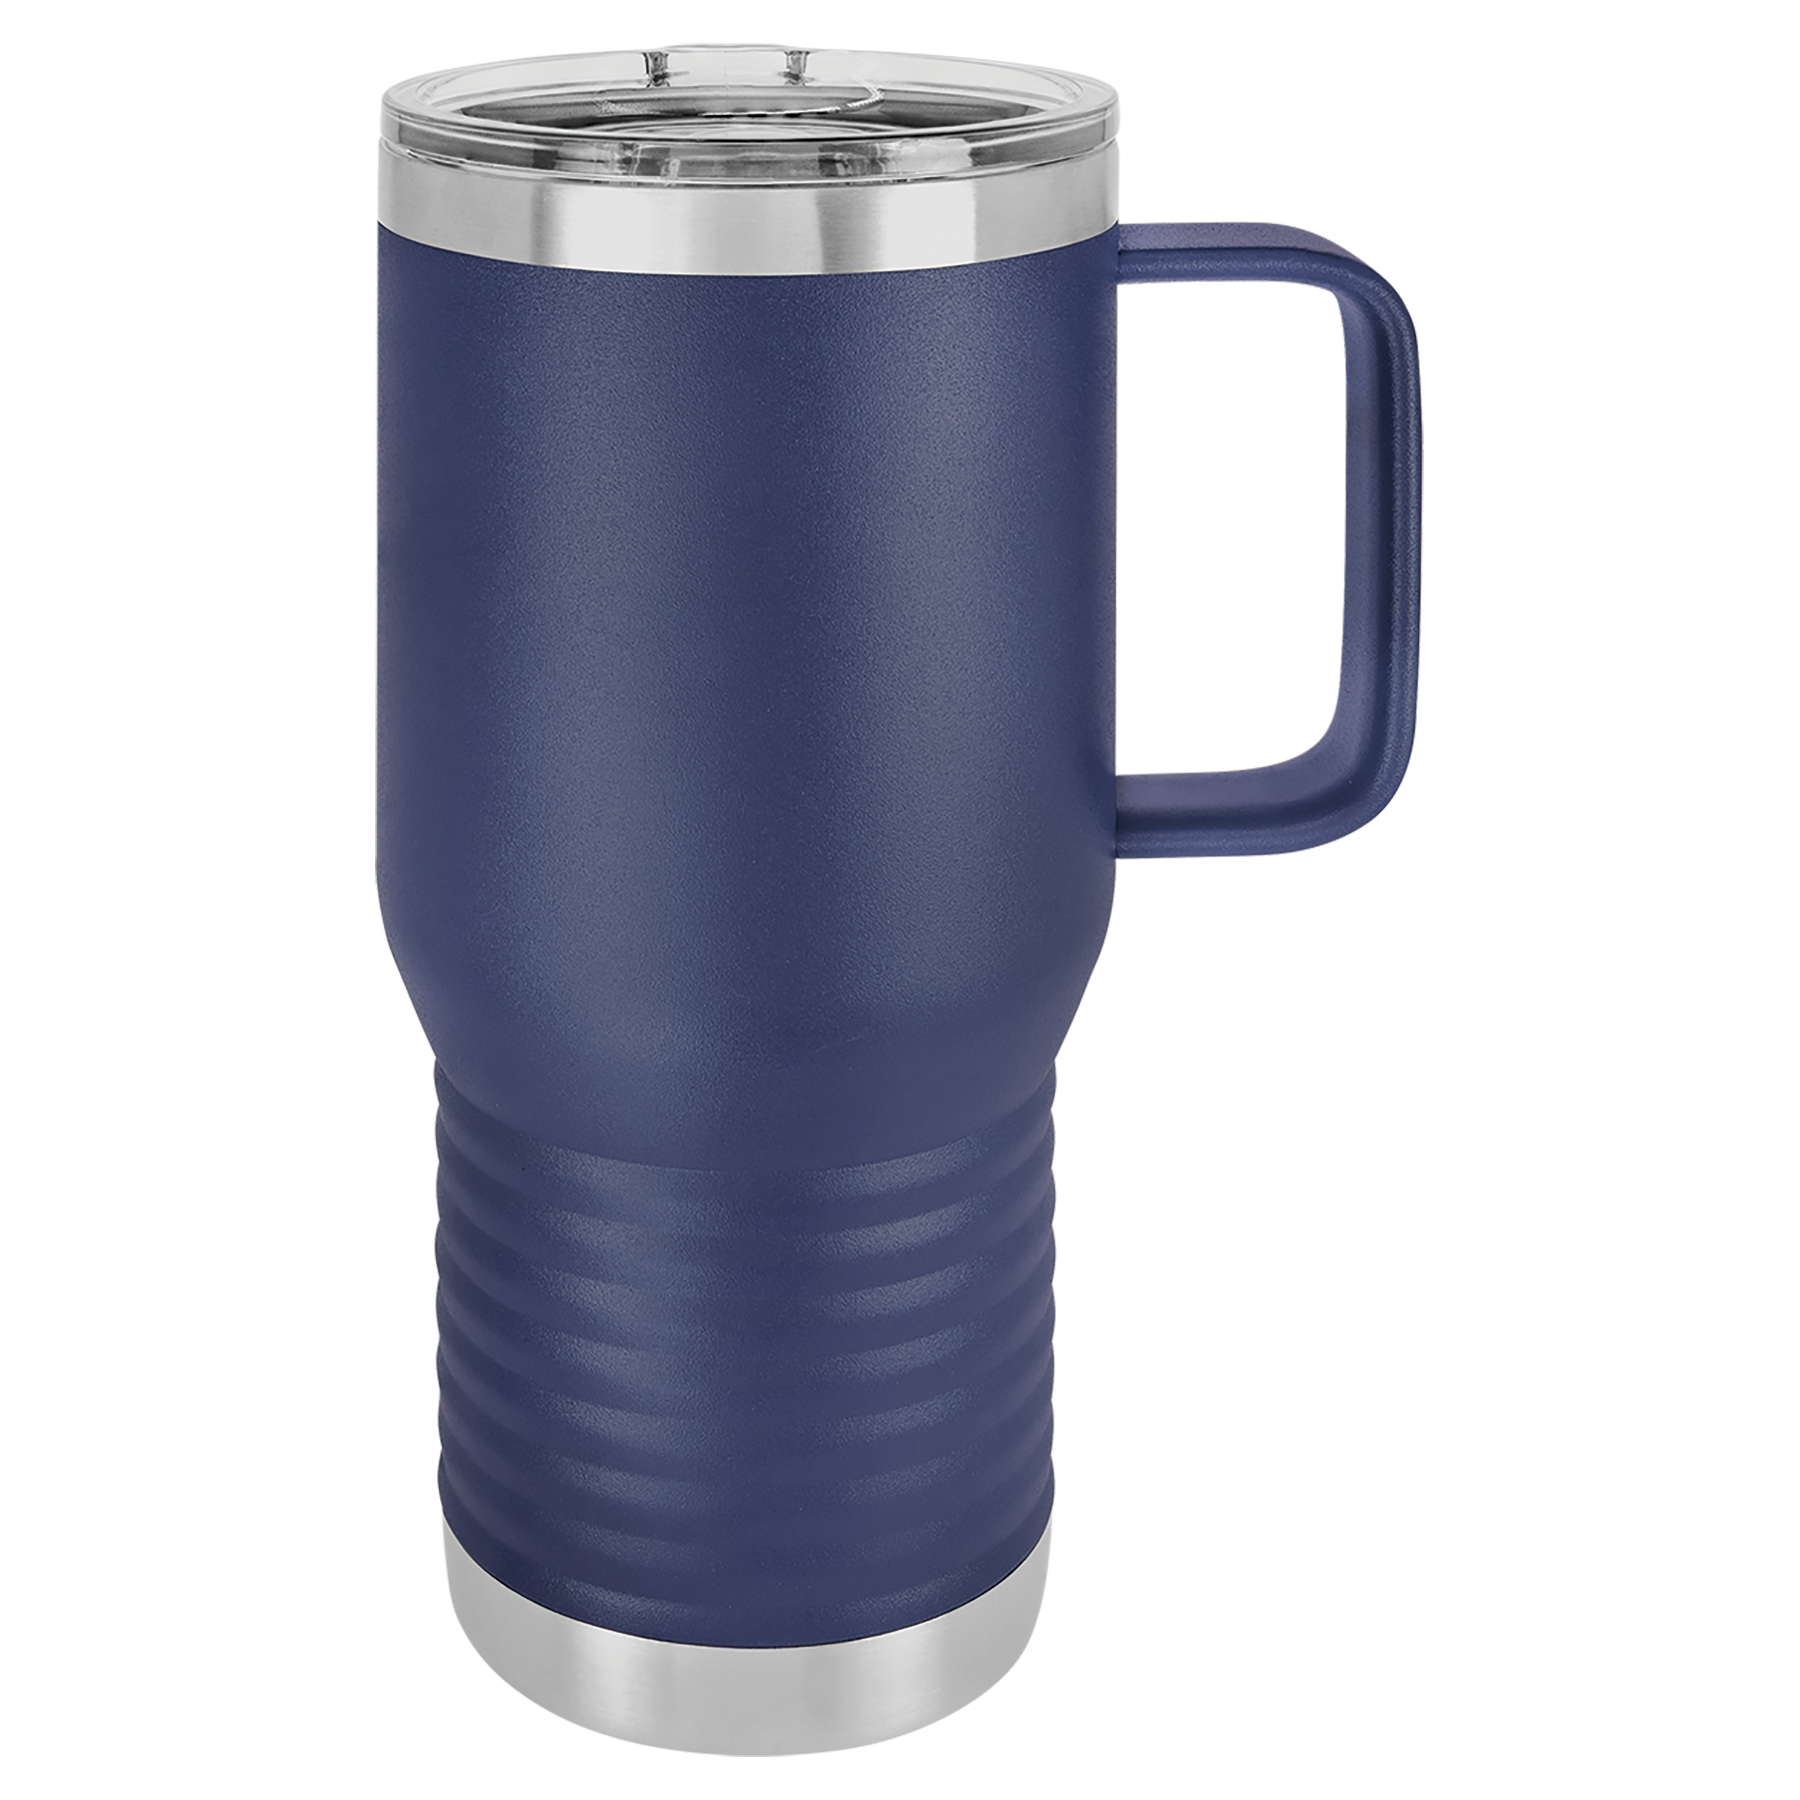 14oz Coffee Mug With Sliding Lid - Powder Coated Navy Blue